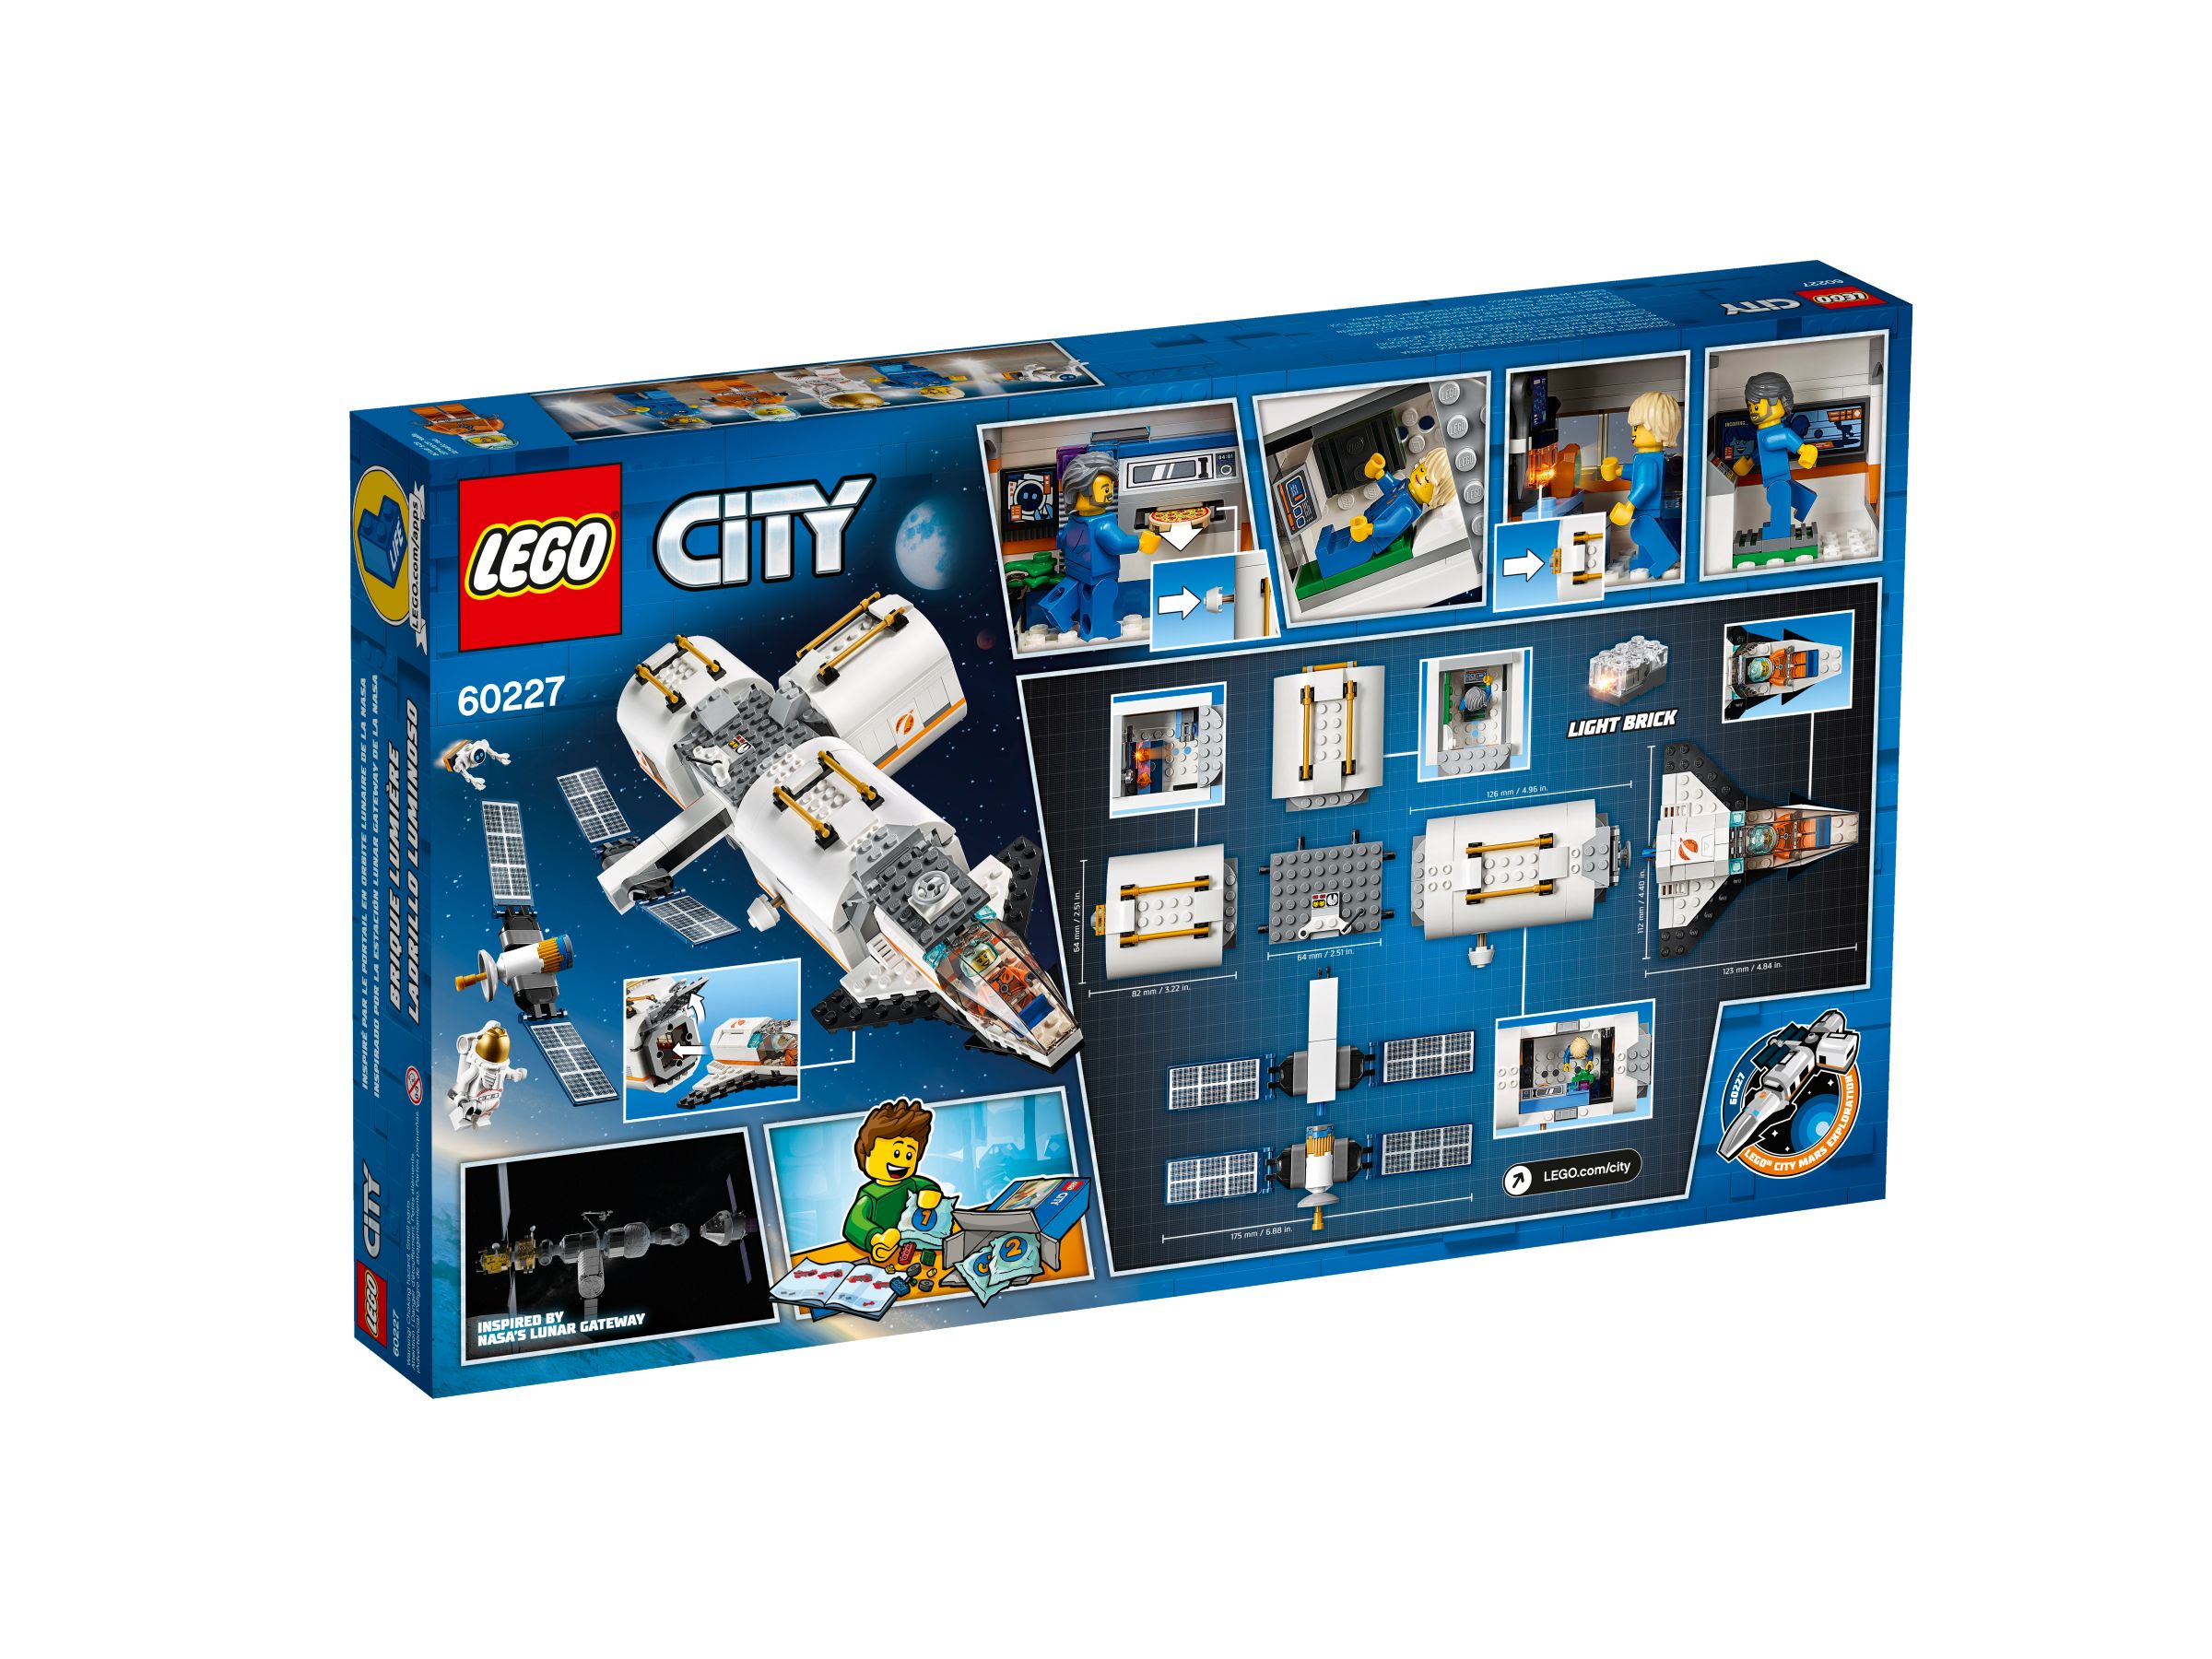 LEGO City 60227 Mars Mission Mondstation LEGO_60227_alt4.jpg